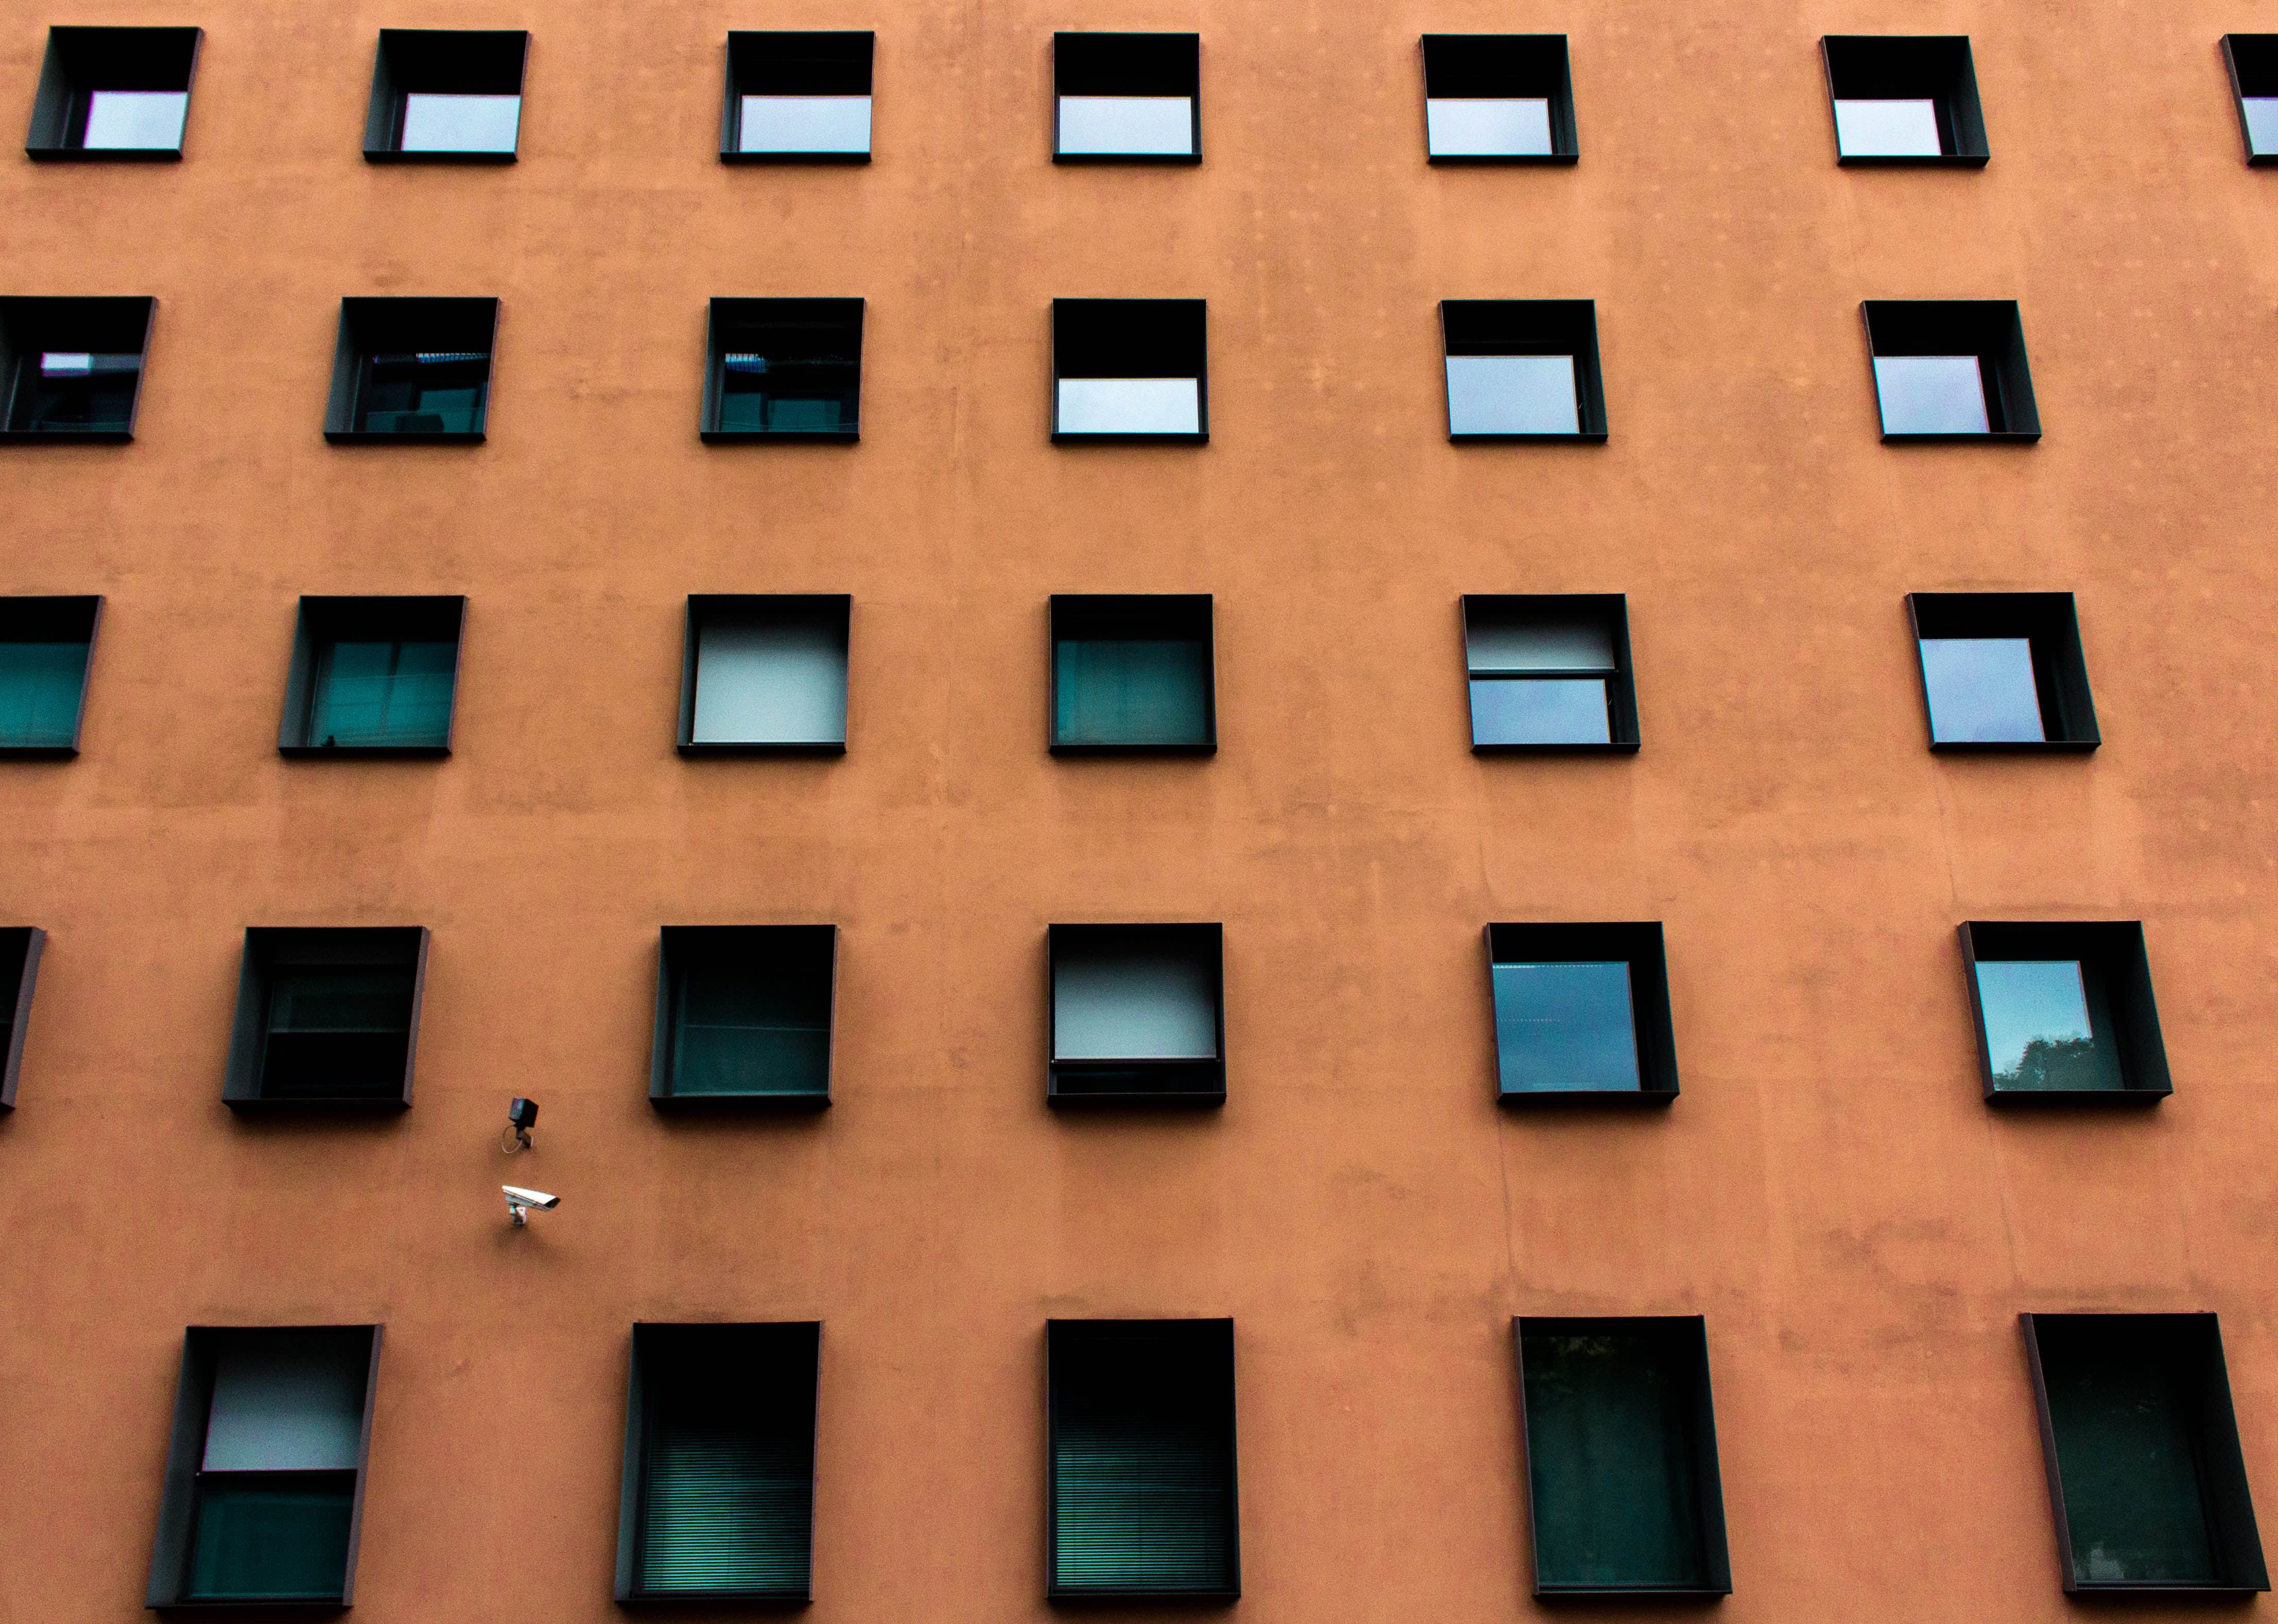 cray building facade with windows